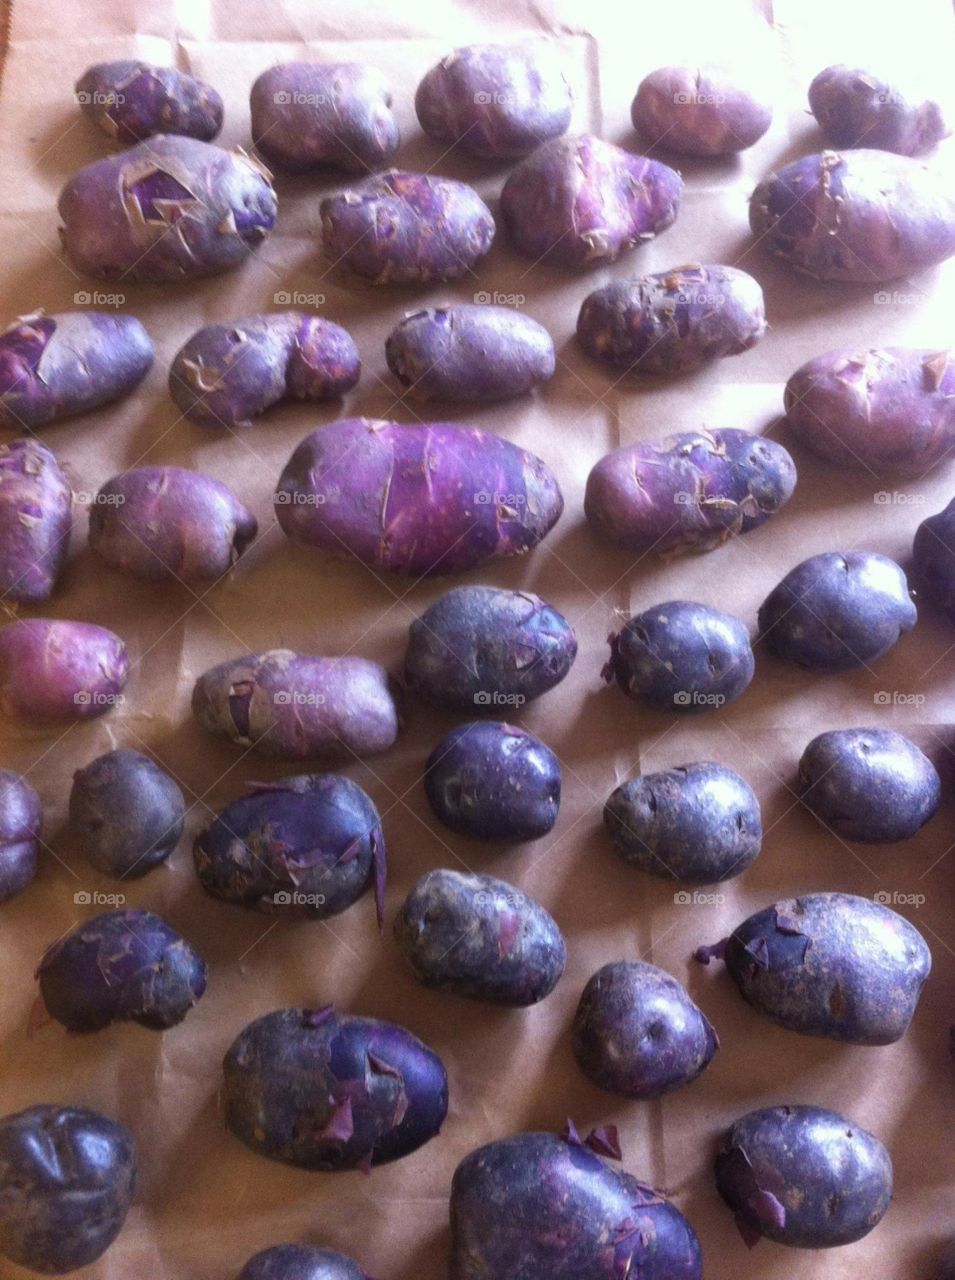 Blue and purple potatoes